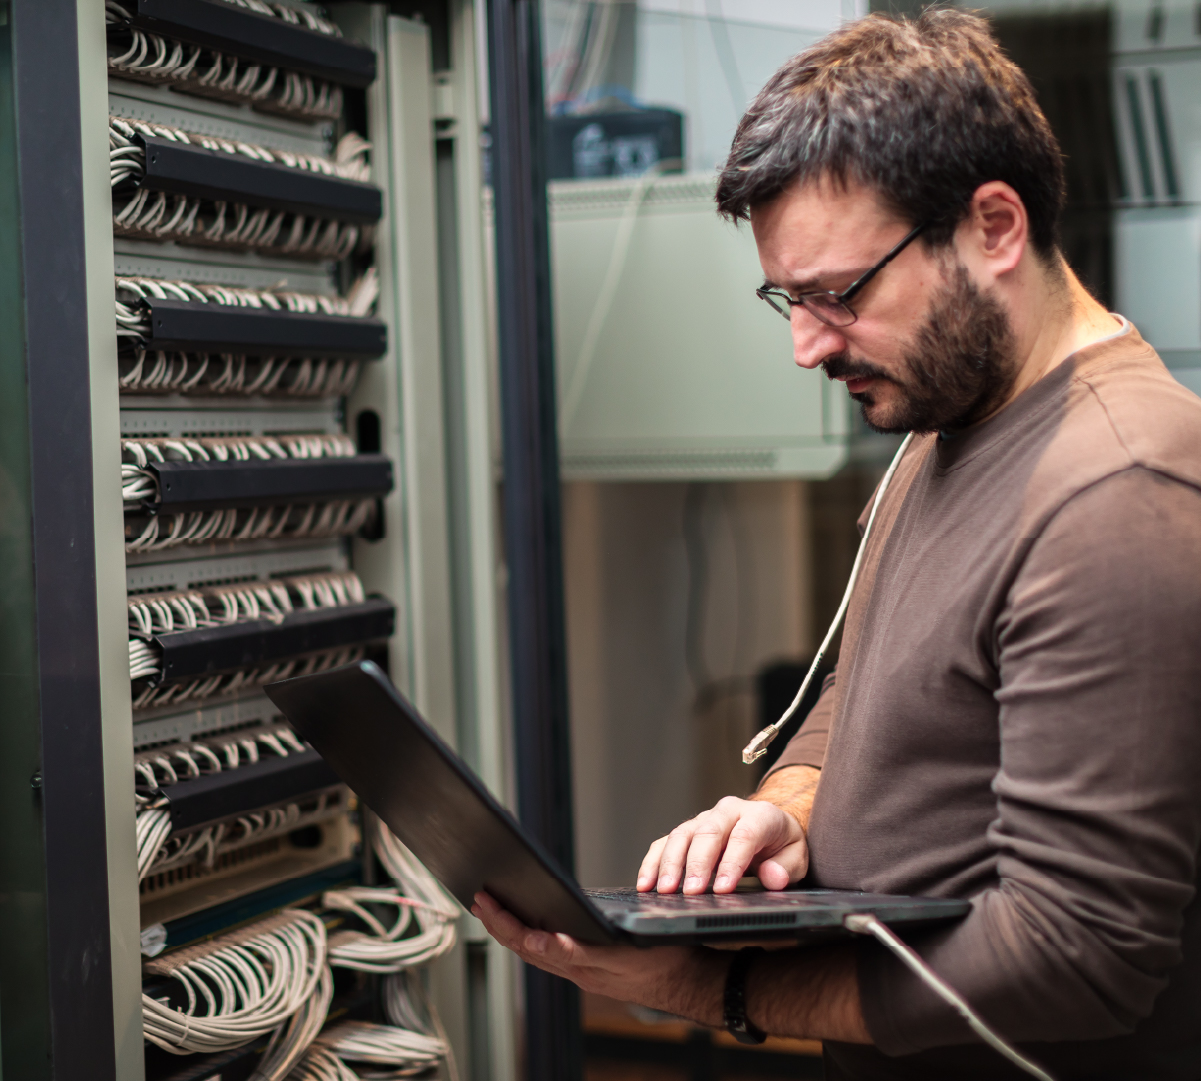 Decorative image: Technician with laptop examining servers